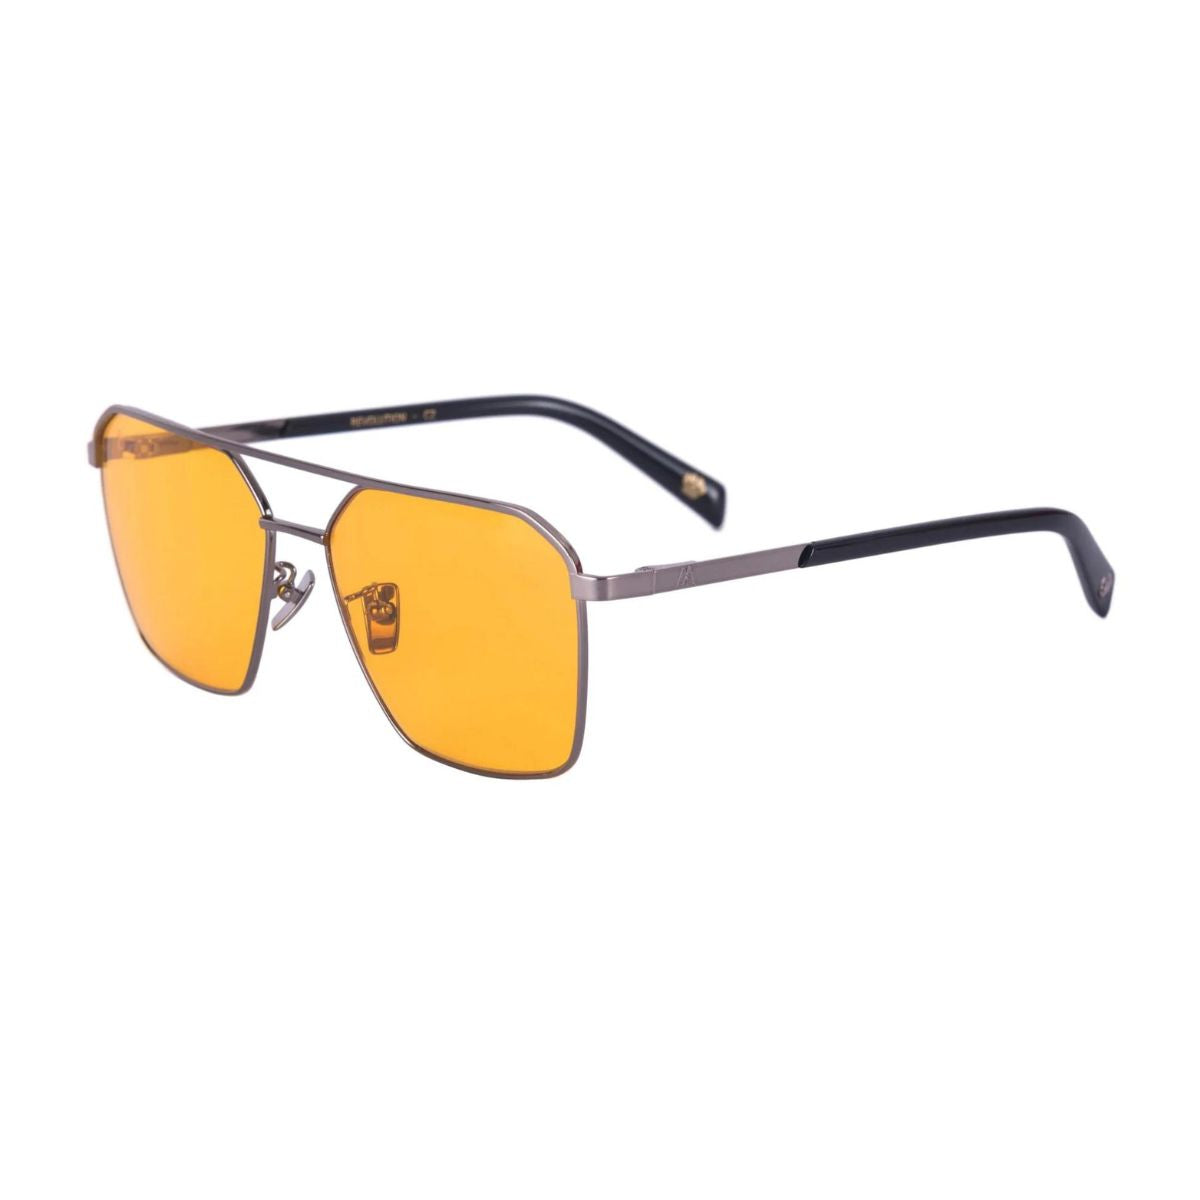 "Buy The Monk Revolution C2 Square Frame UV Sunglasses For Men And Women At Optorium"